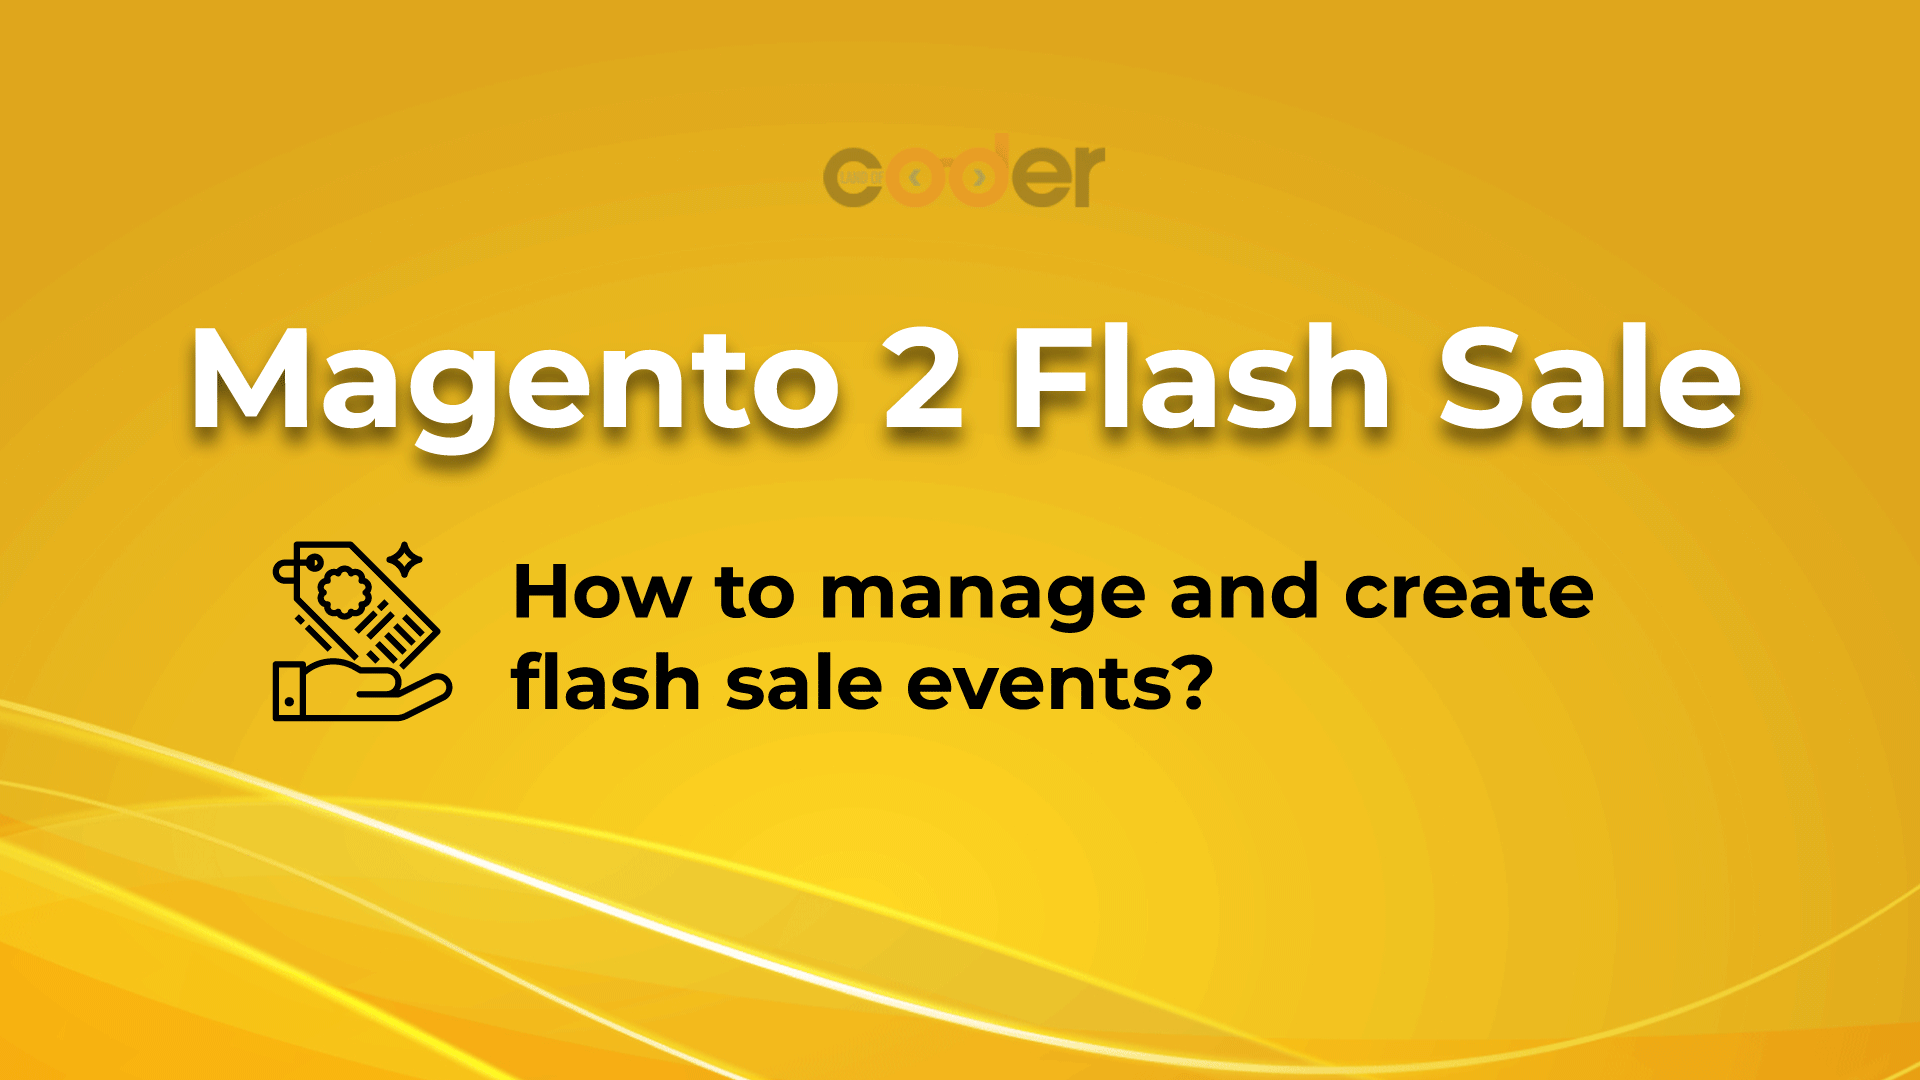 Magento Flash Sale Video Guide